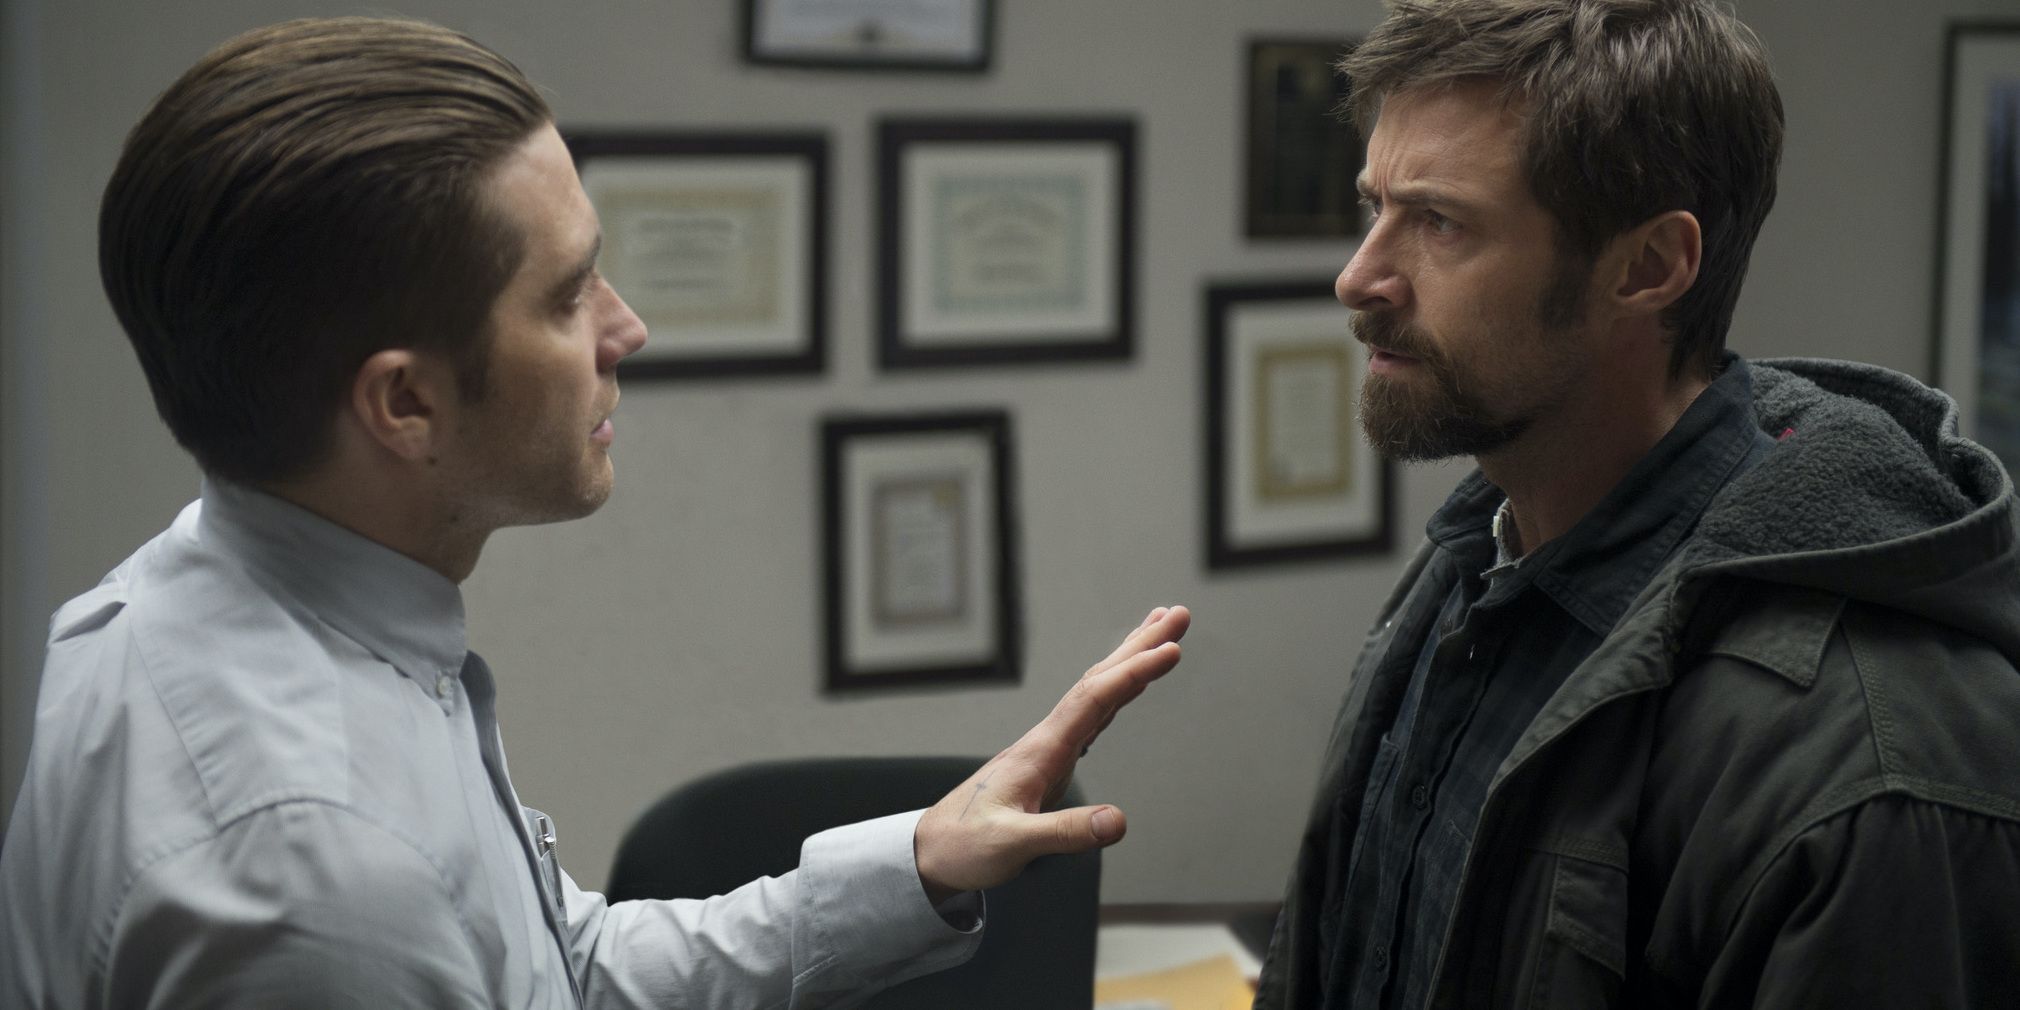 Hugh Jackman and Jake Gyllenhaal in Prisoners having a tense conversation